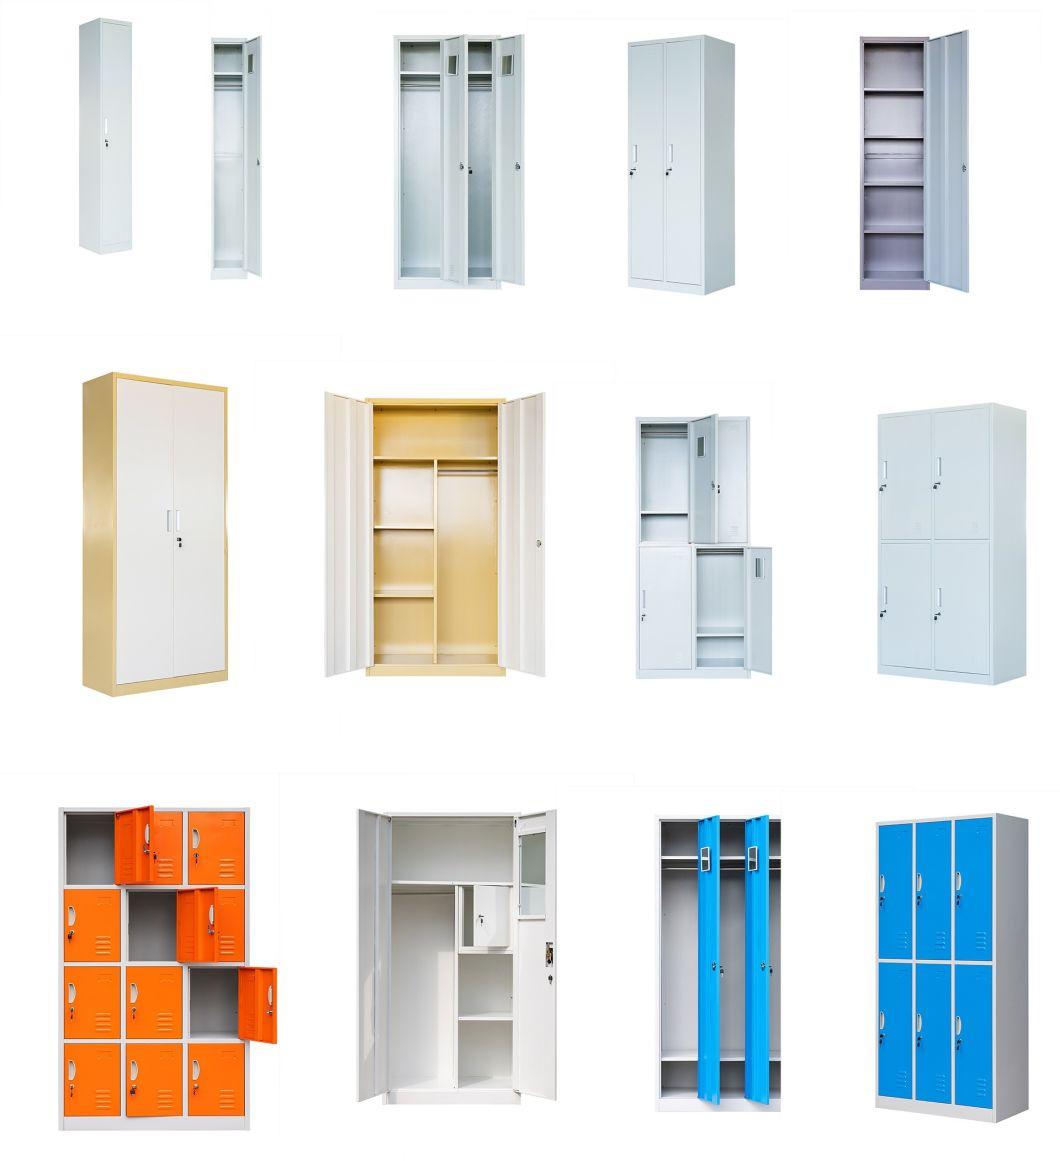 10 Door Steel Storage Cabinet for School/Gym/Library Use